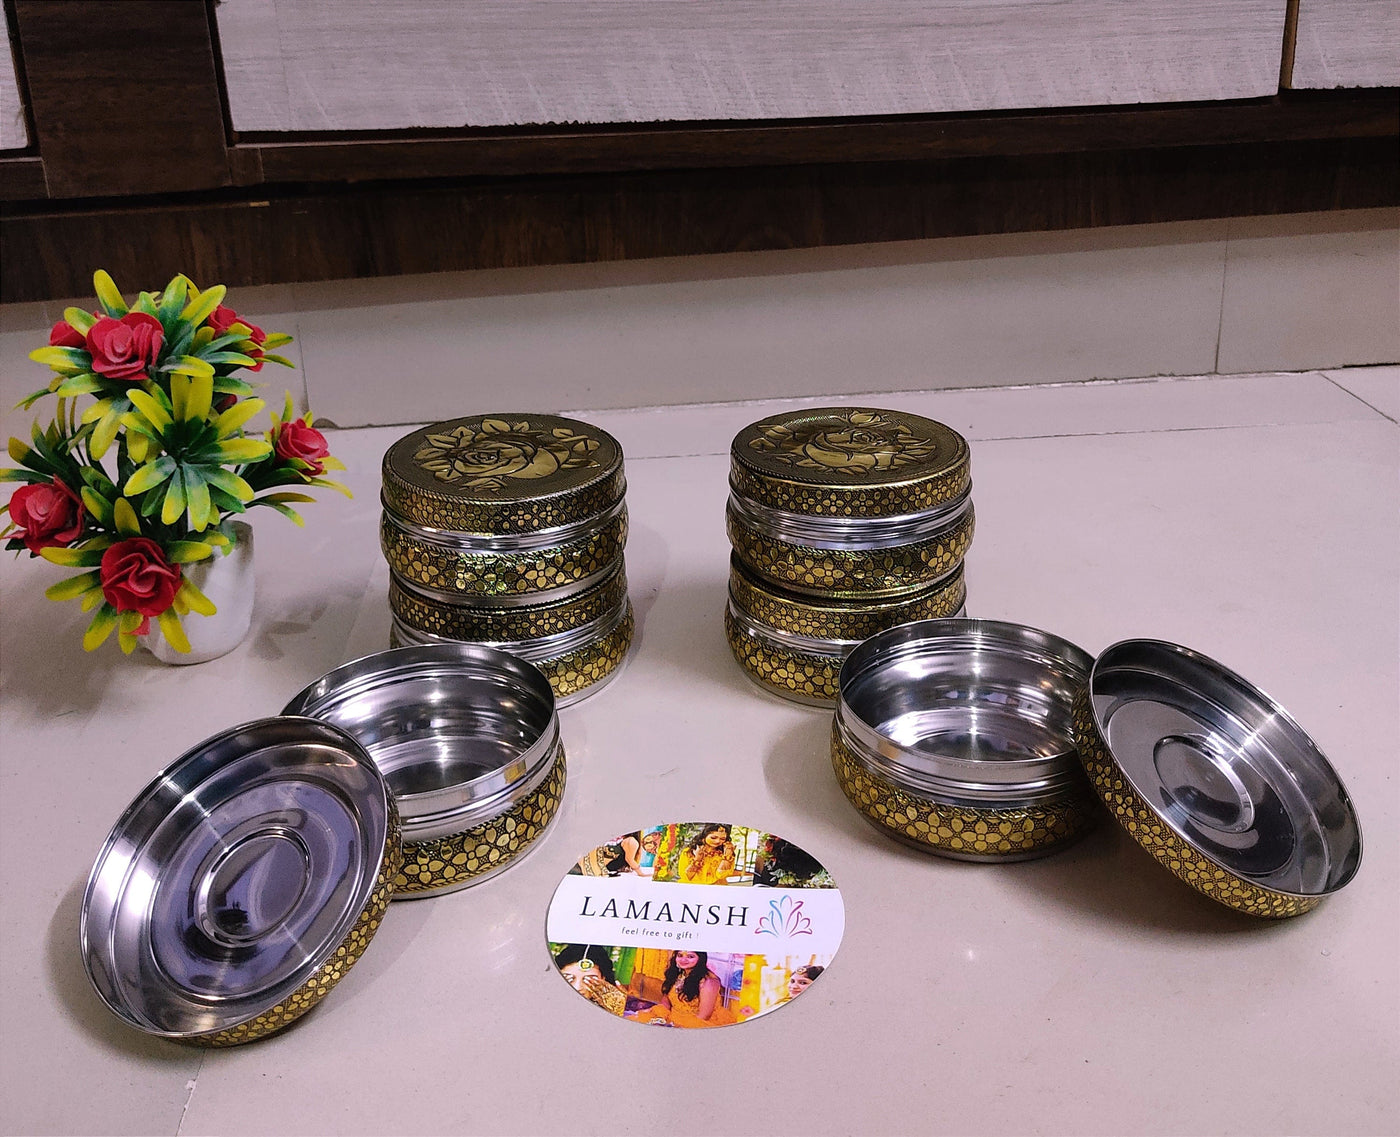 95 Rs each on Purchasing in bulk 📱at 8619550223 steel gift box LAMANSH® (4 inch diameter) Golden Floral work Stainless Meenakari Work Gift 🎁 Steel Box Dabba for Wedding Pooja Return Gifting & Favours 🎁